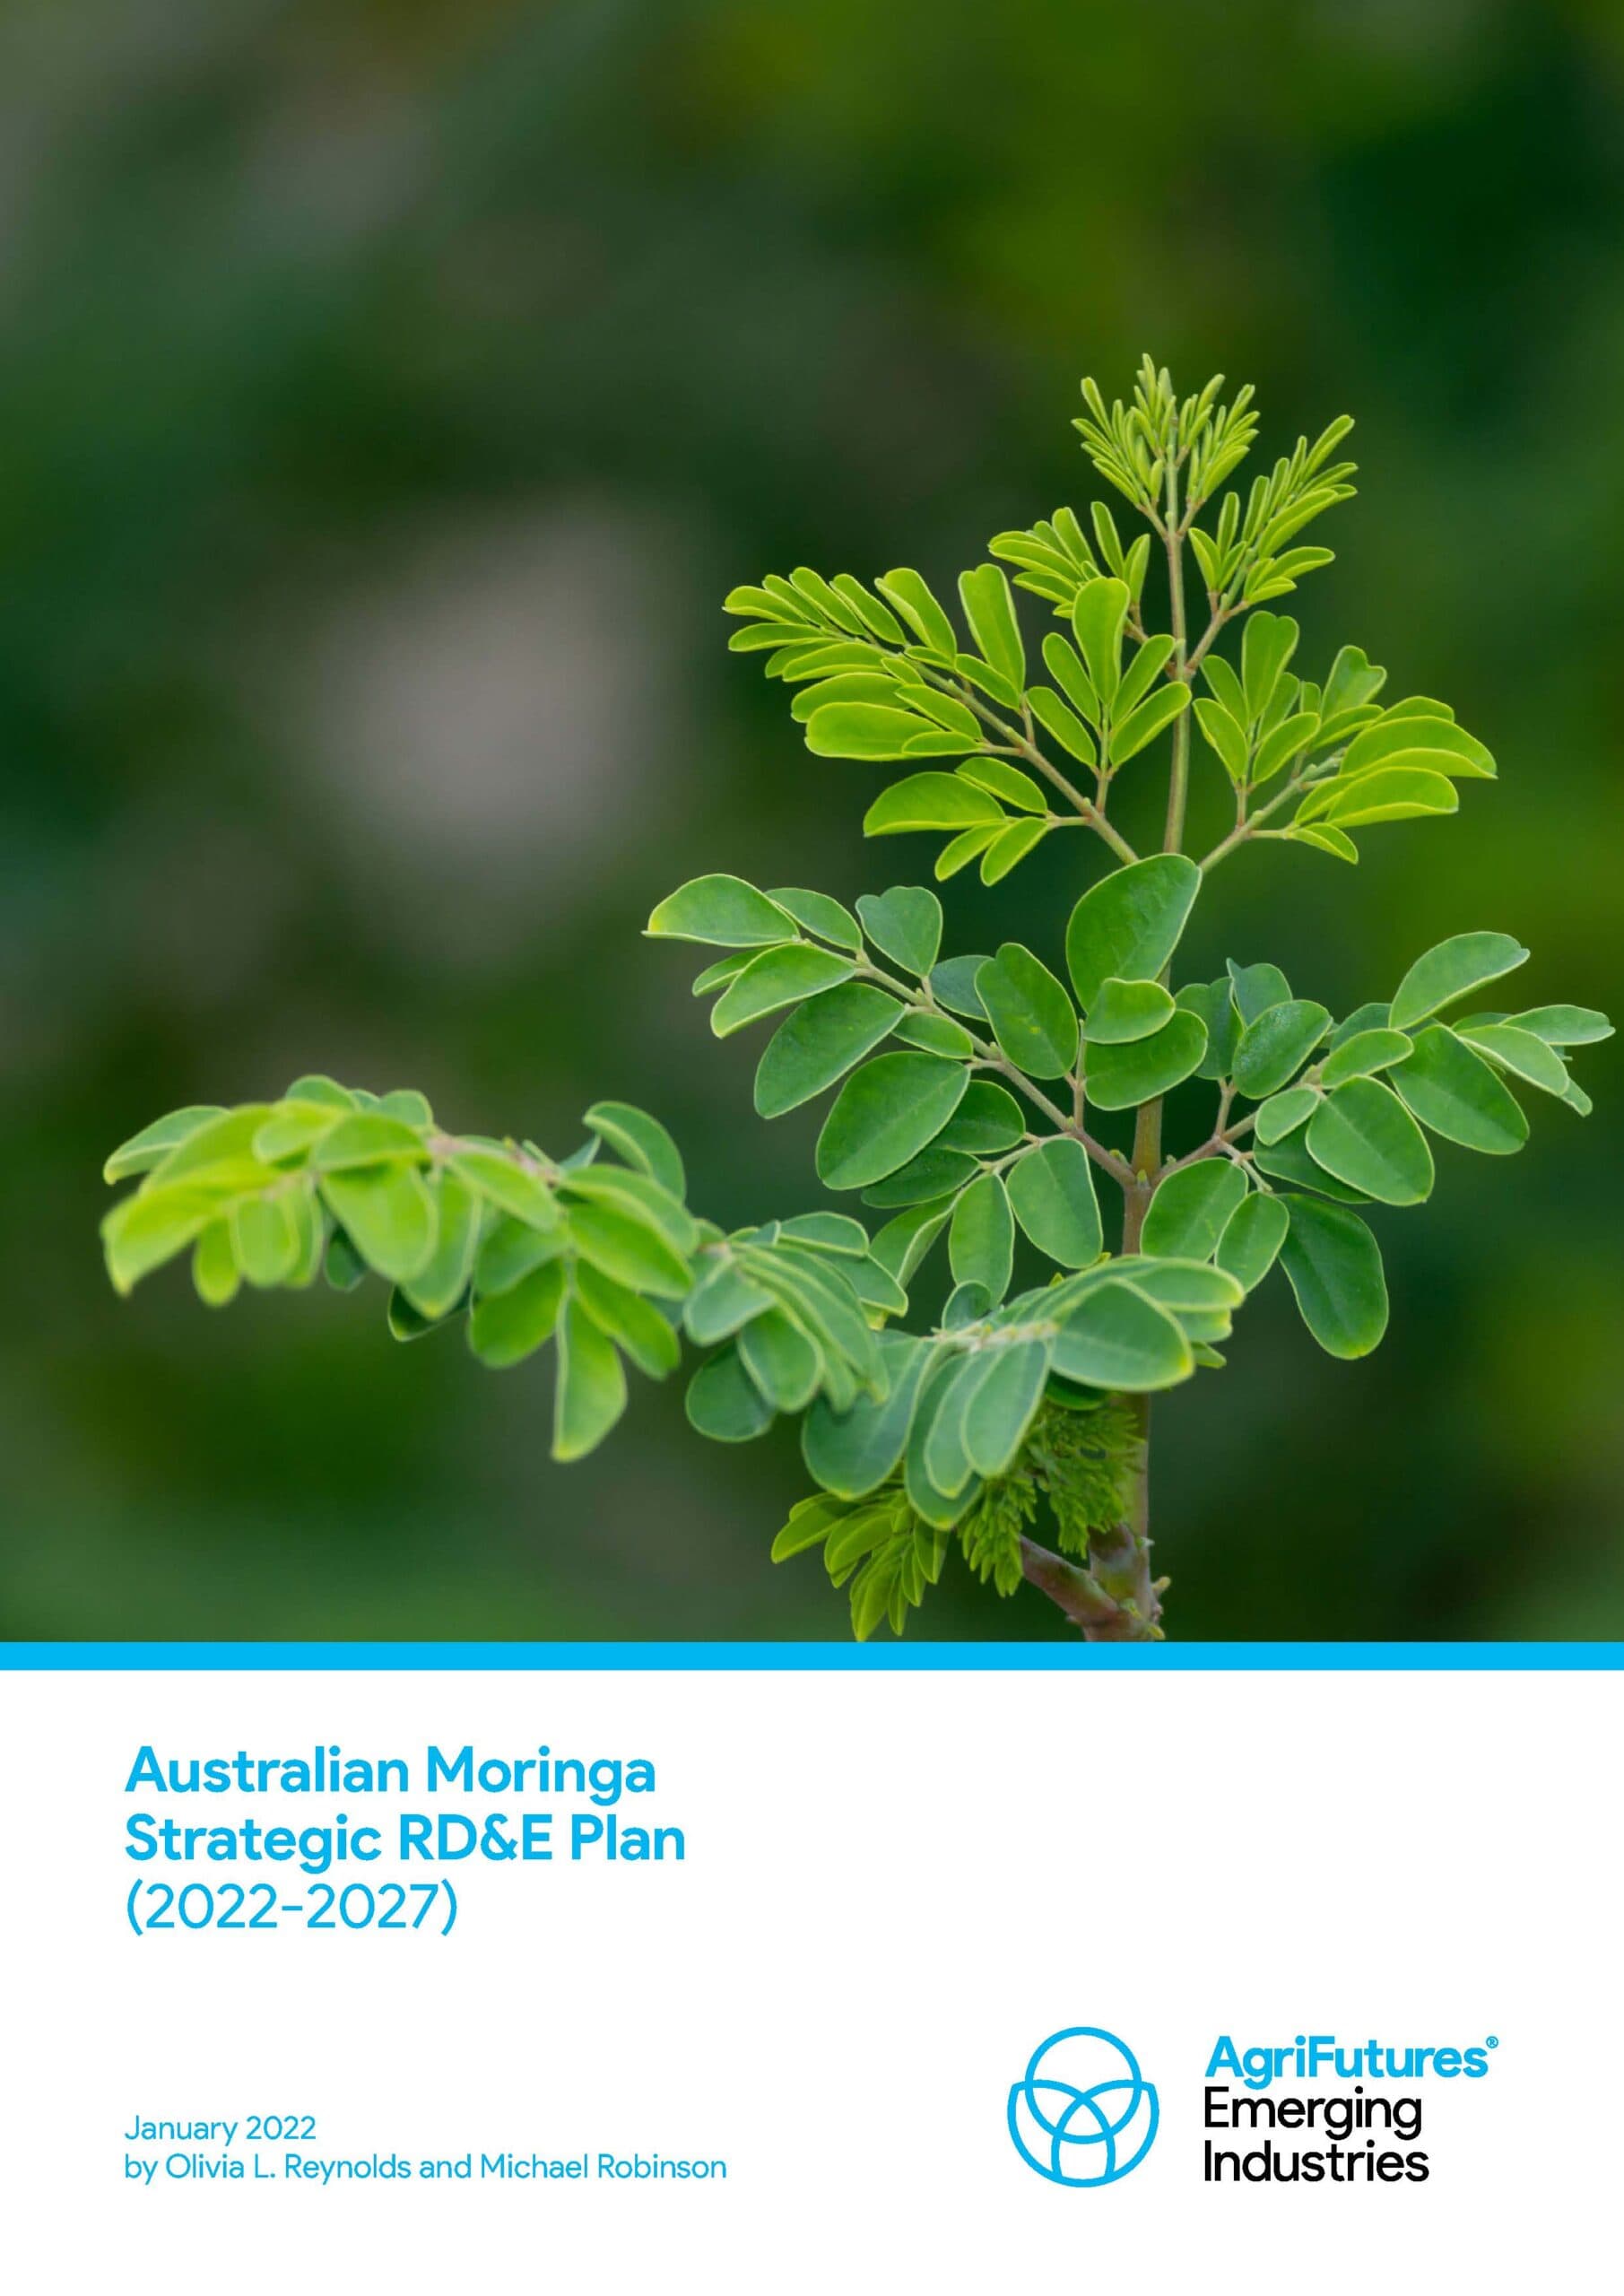 Australian Moringa Strategic RD&E Plan - image